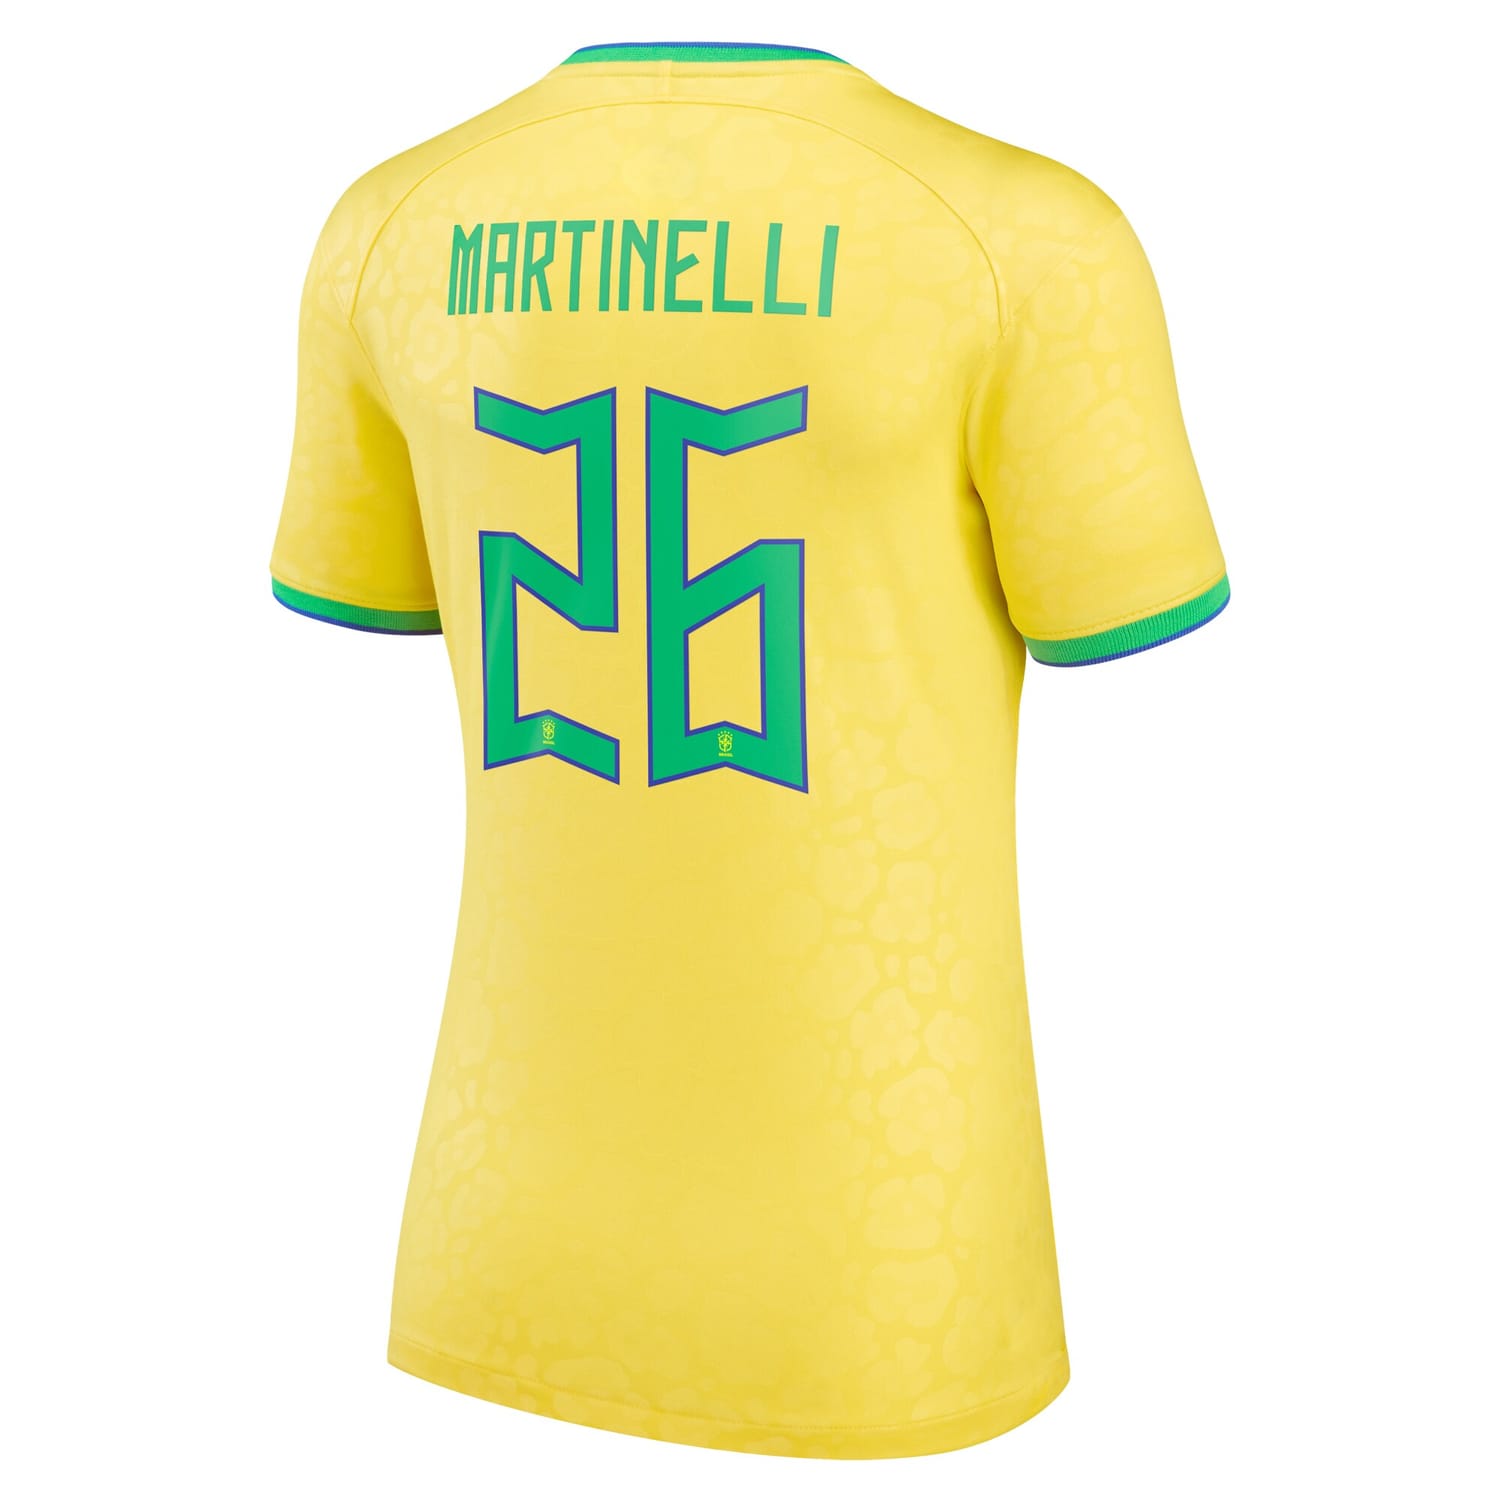 Brazil National Team Home Jersey Shirt Yellow 2022-23 player Gabriel Martinelli printing for Women